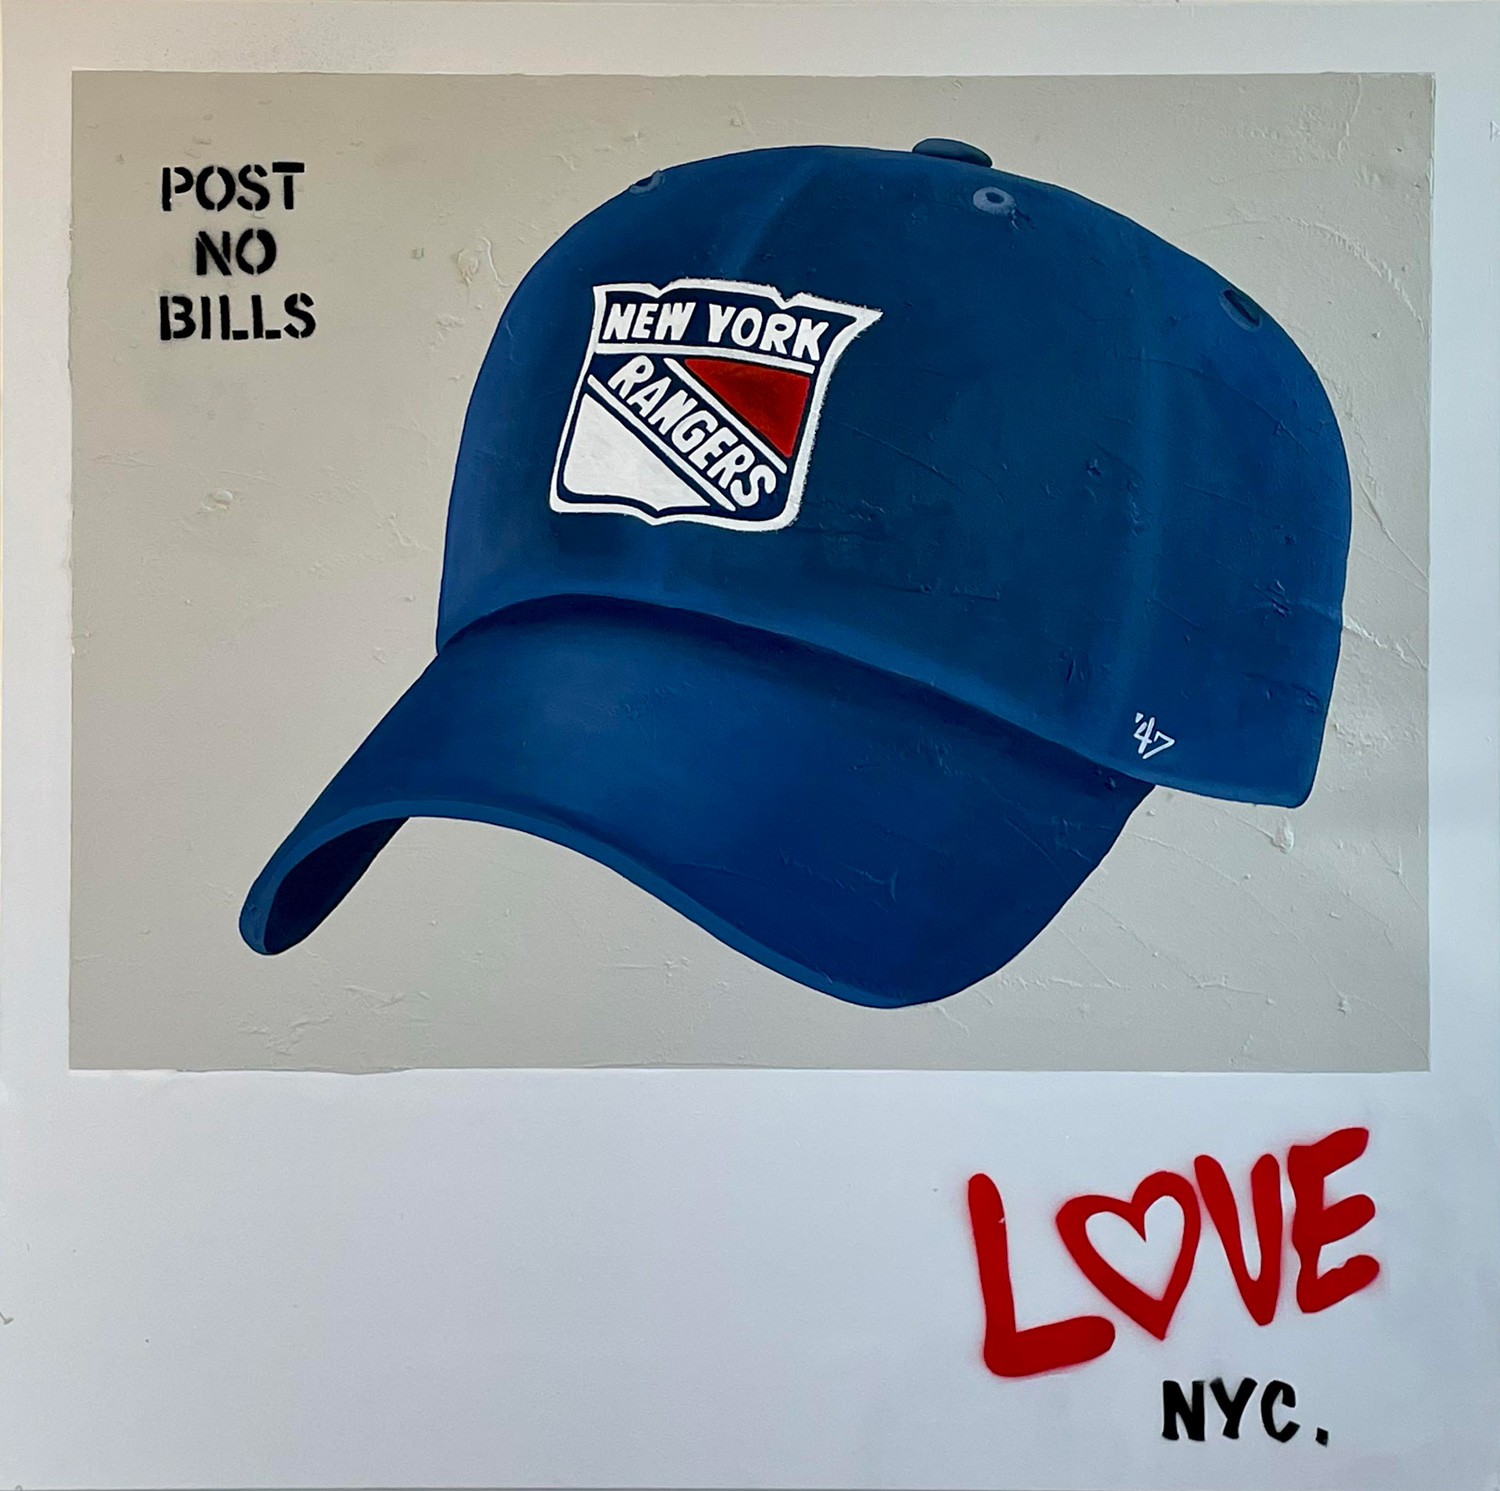 New York Rangers hat